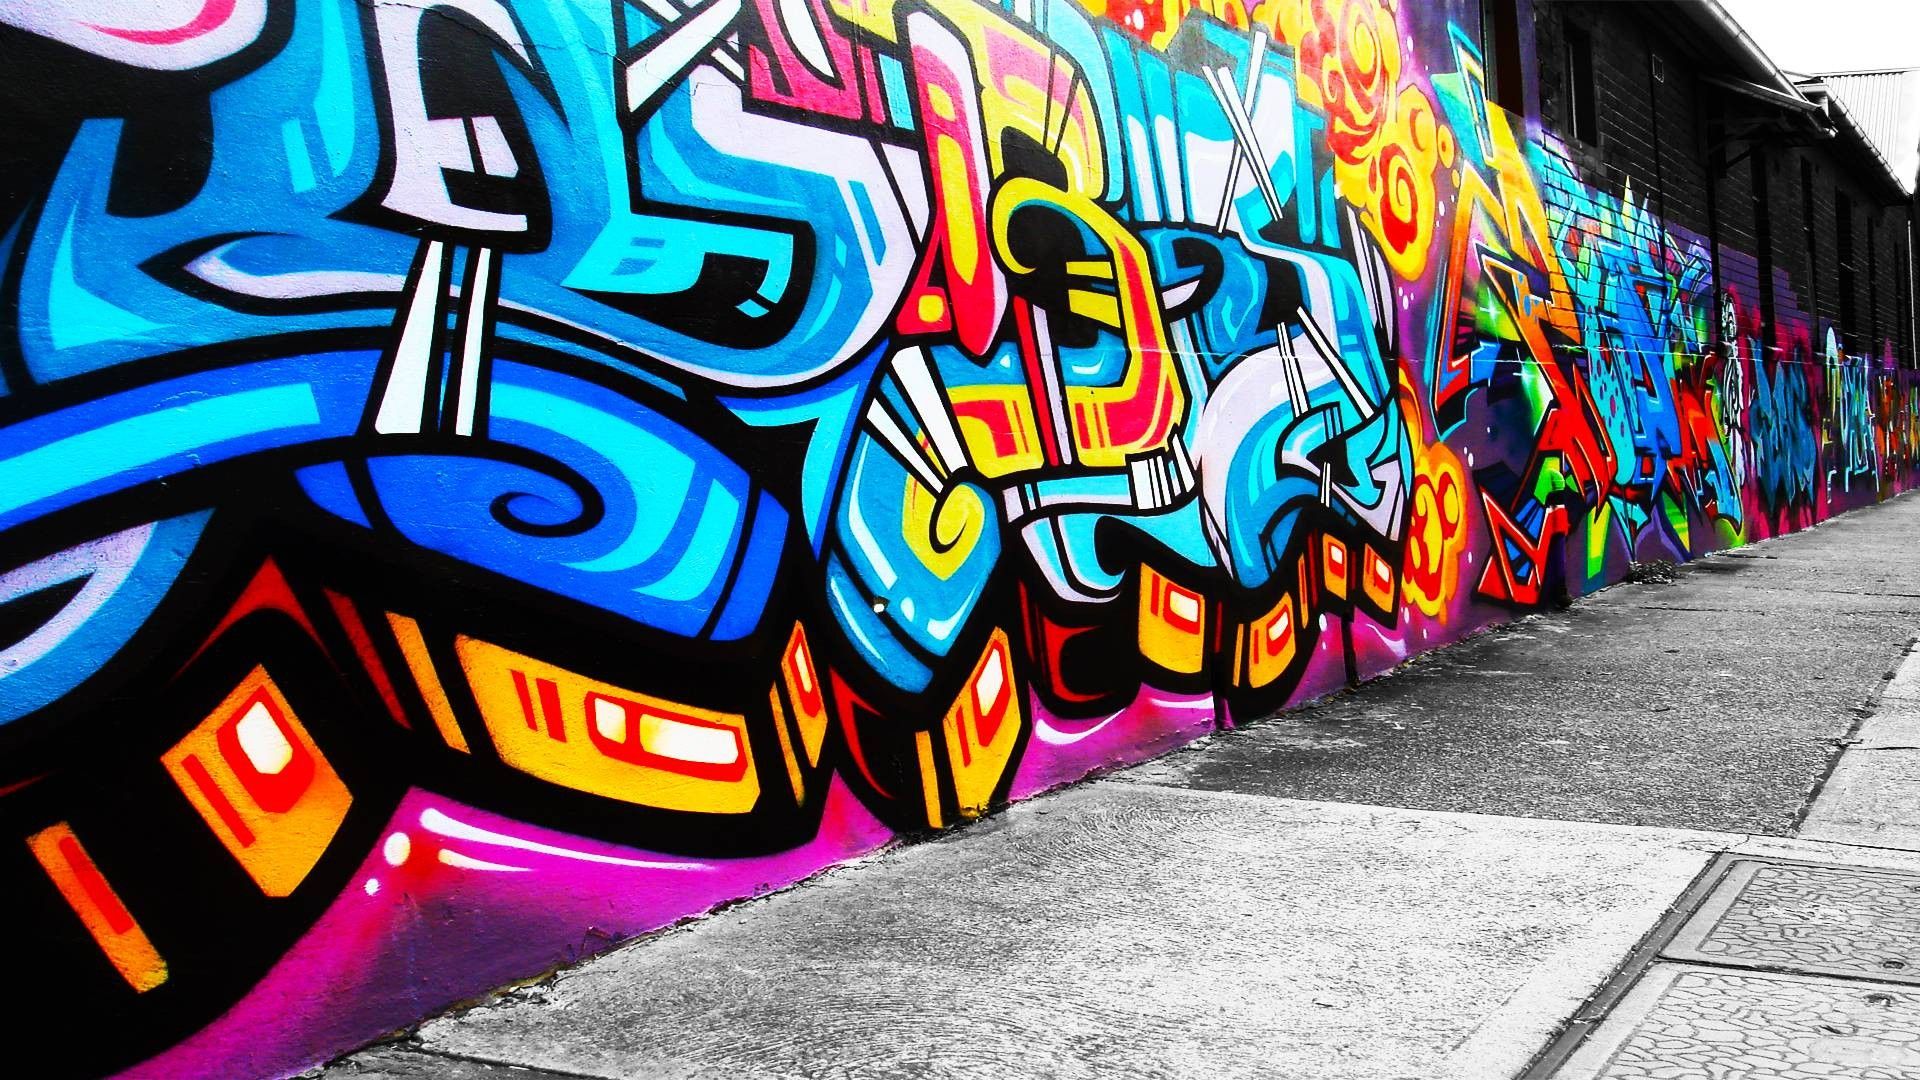 Graffiti Letters Wallpaper. Best HD Wallpaper. Graffiti wallpaper, Graffiti wall art, Graffiti